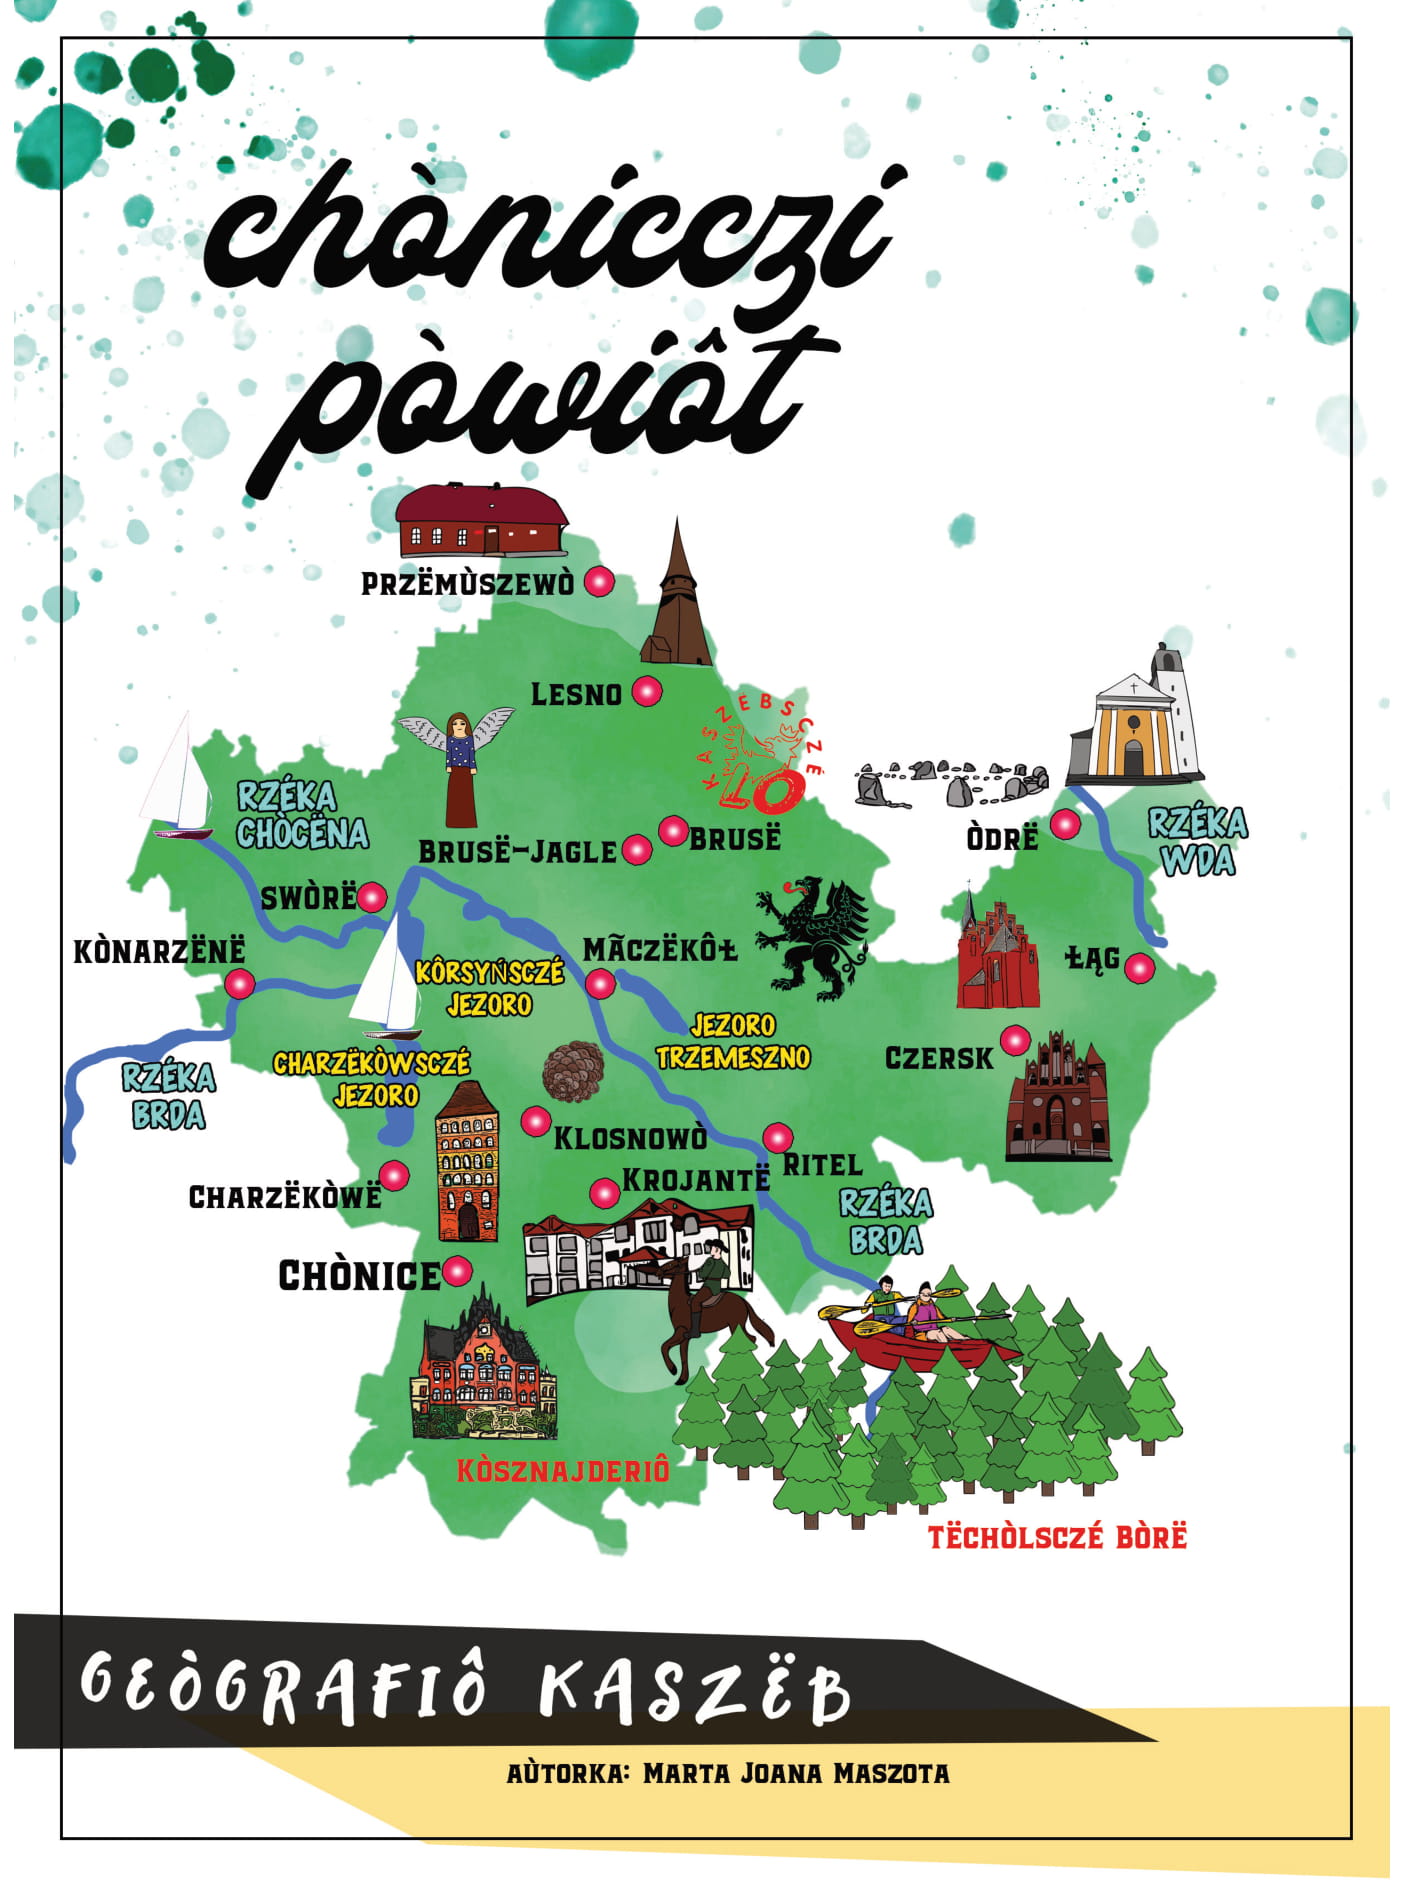 powiat-chojnicki-mapa-skarbnica-kaszubska